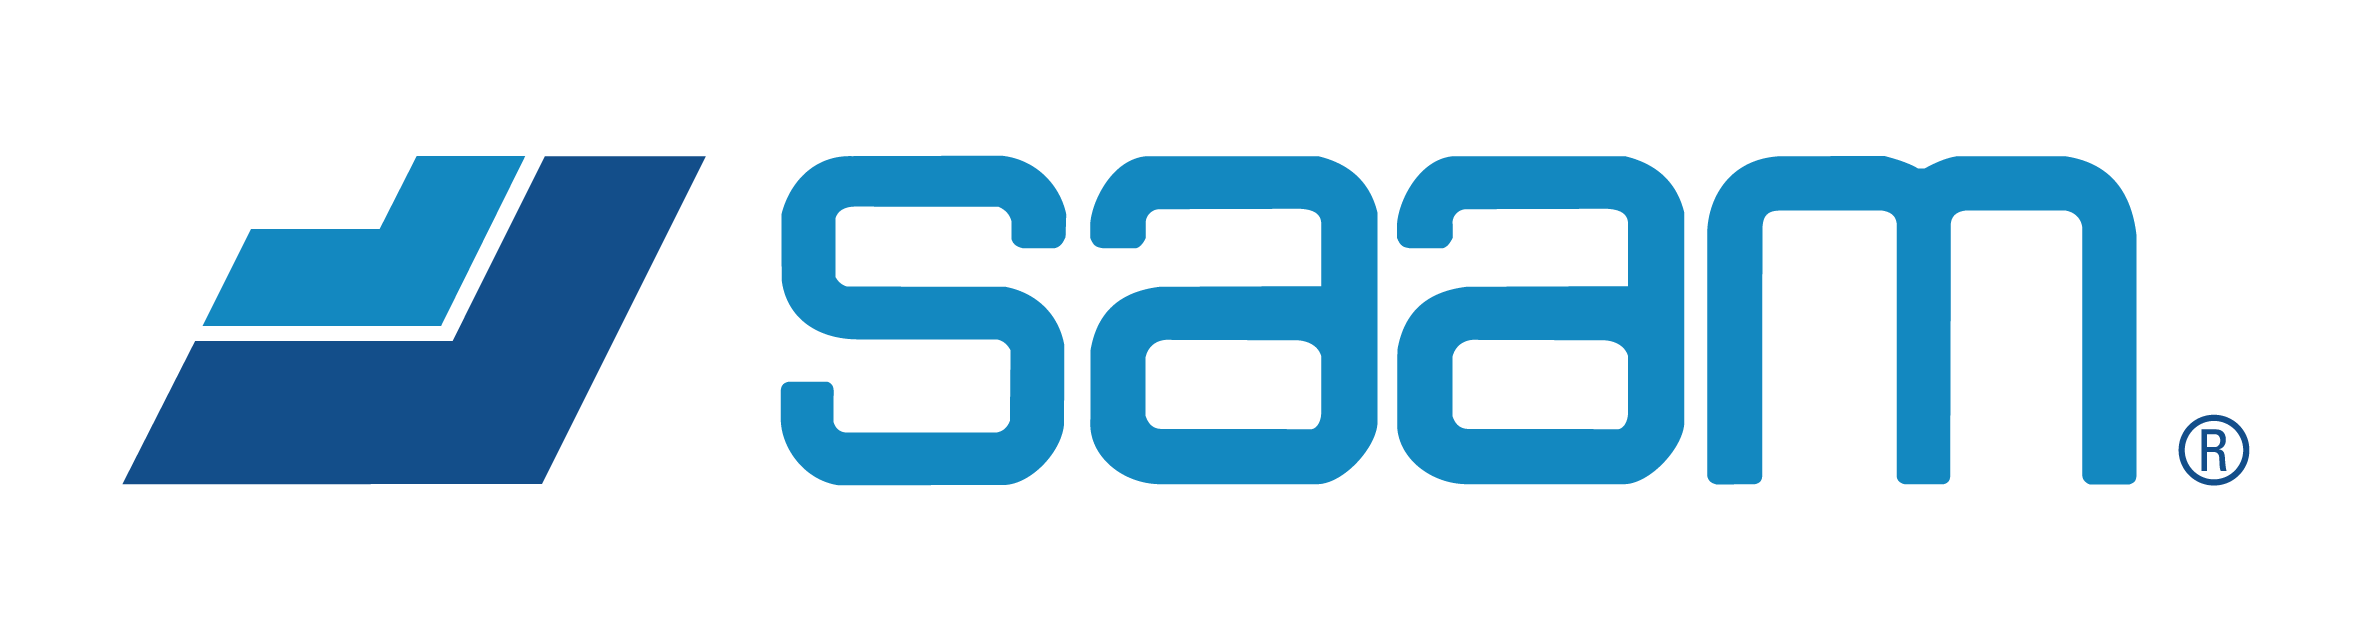 Logo SAAM